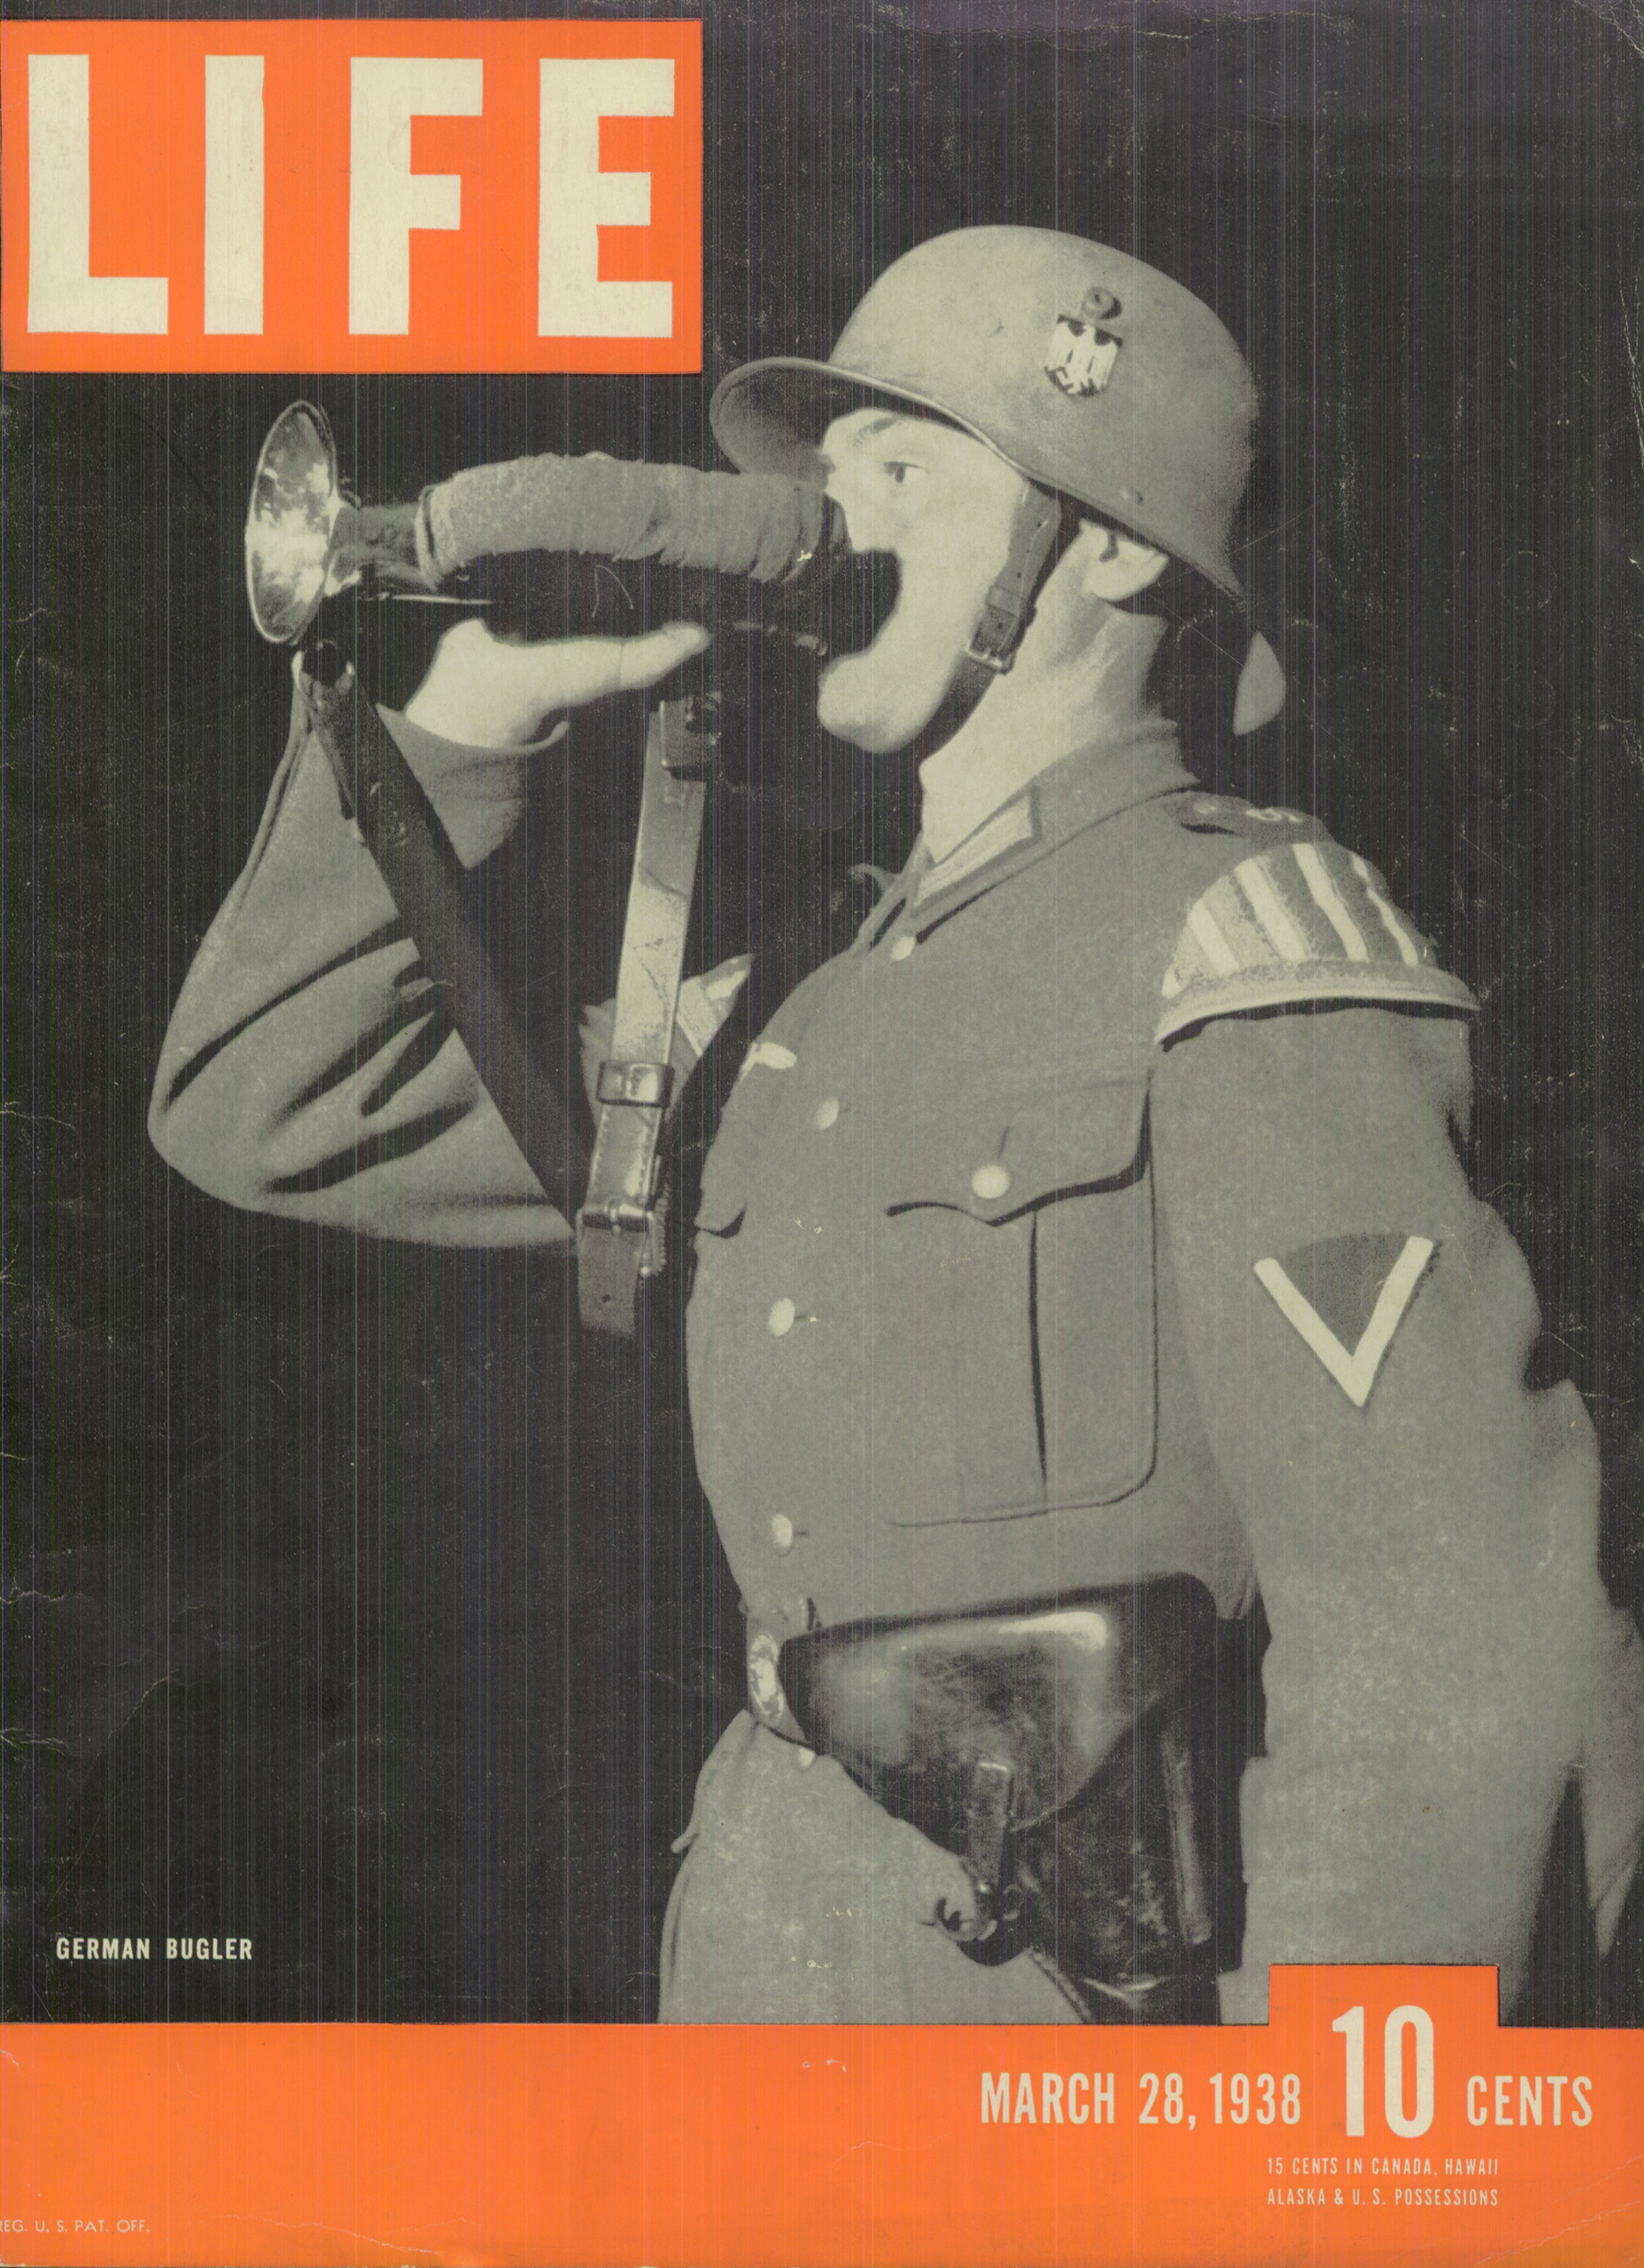 Mar. 28, 1938 cover of LIFE magazine.